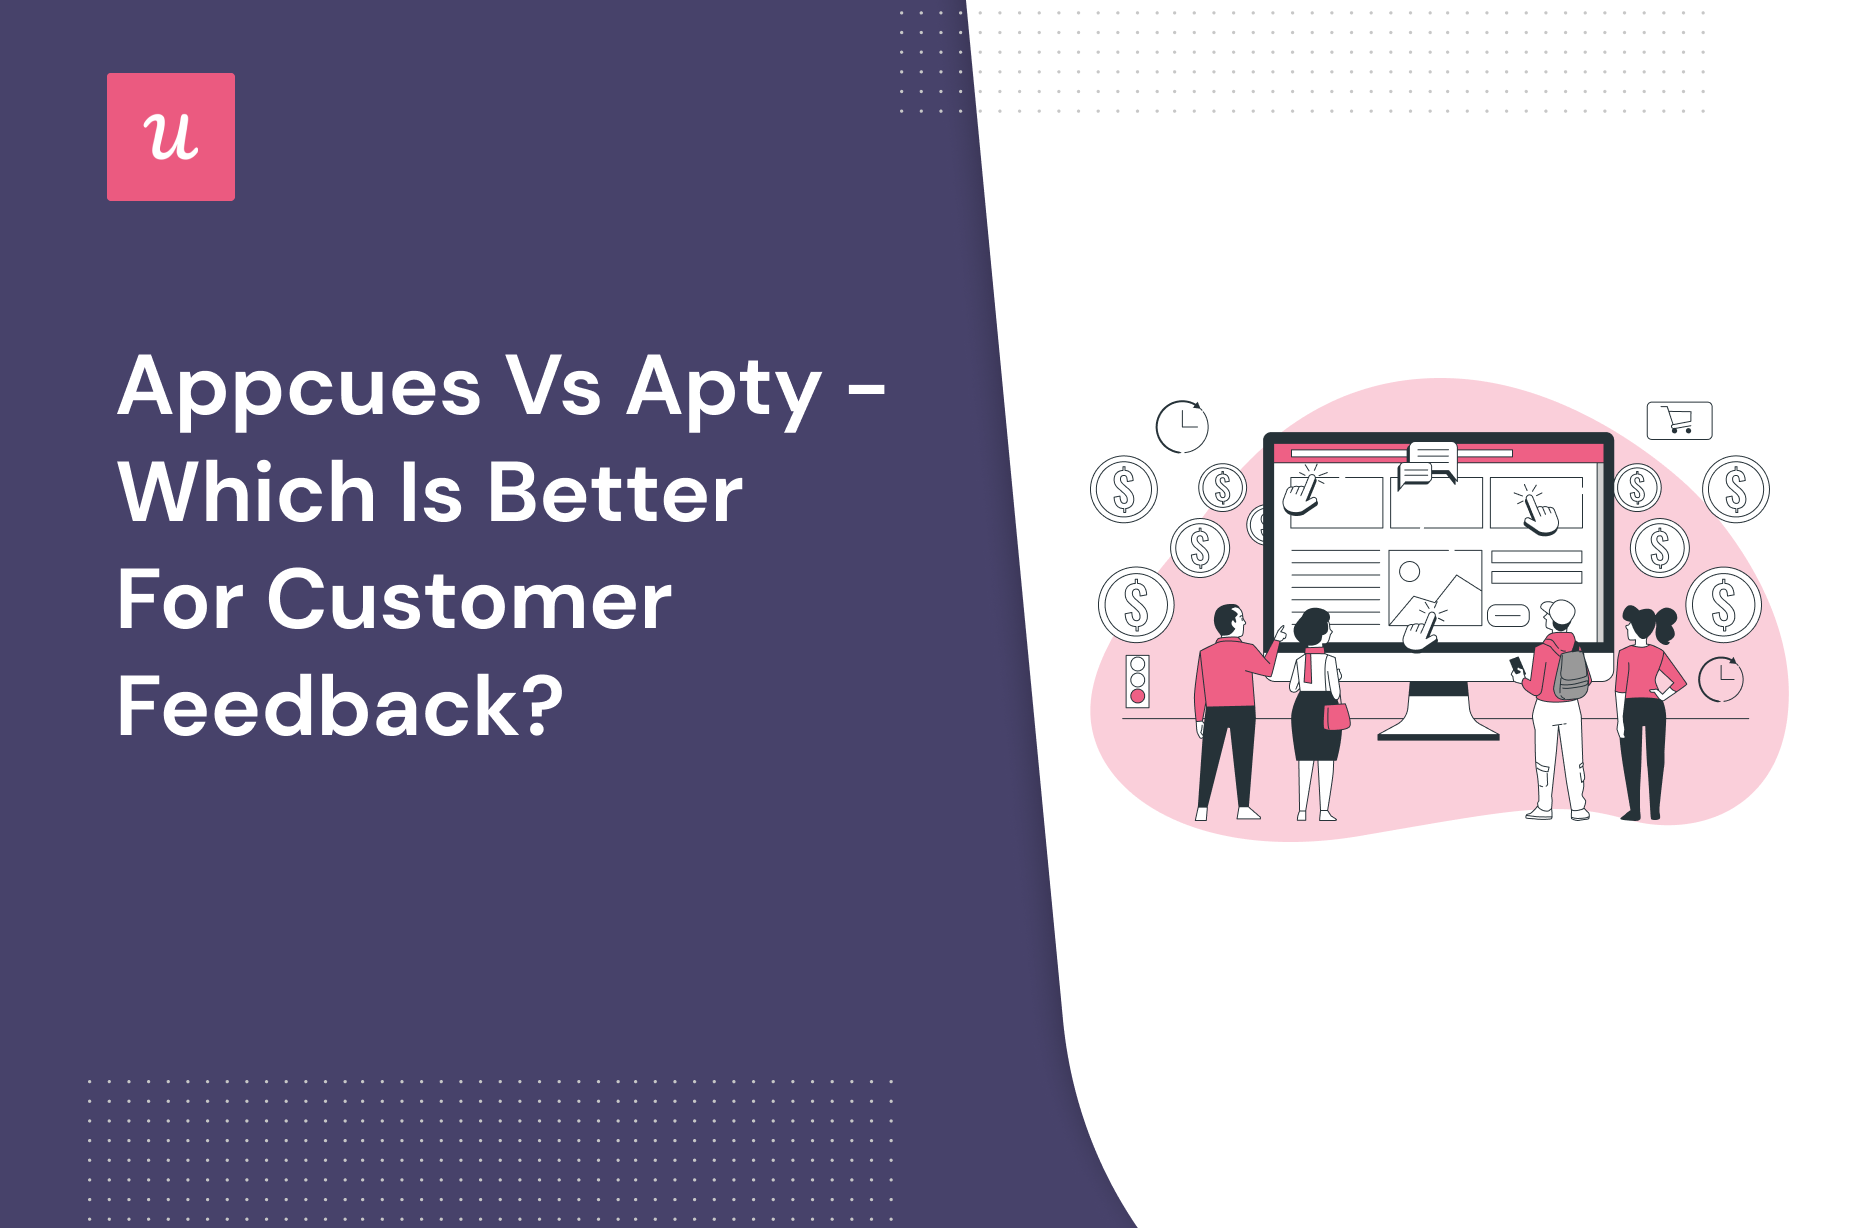 Appcues vs Apty customer feedback